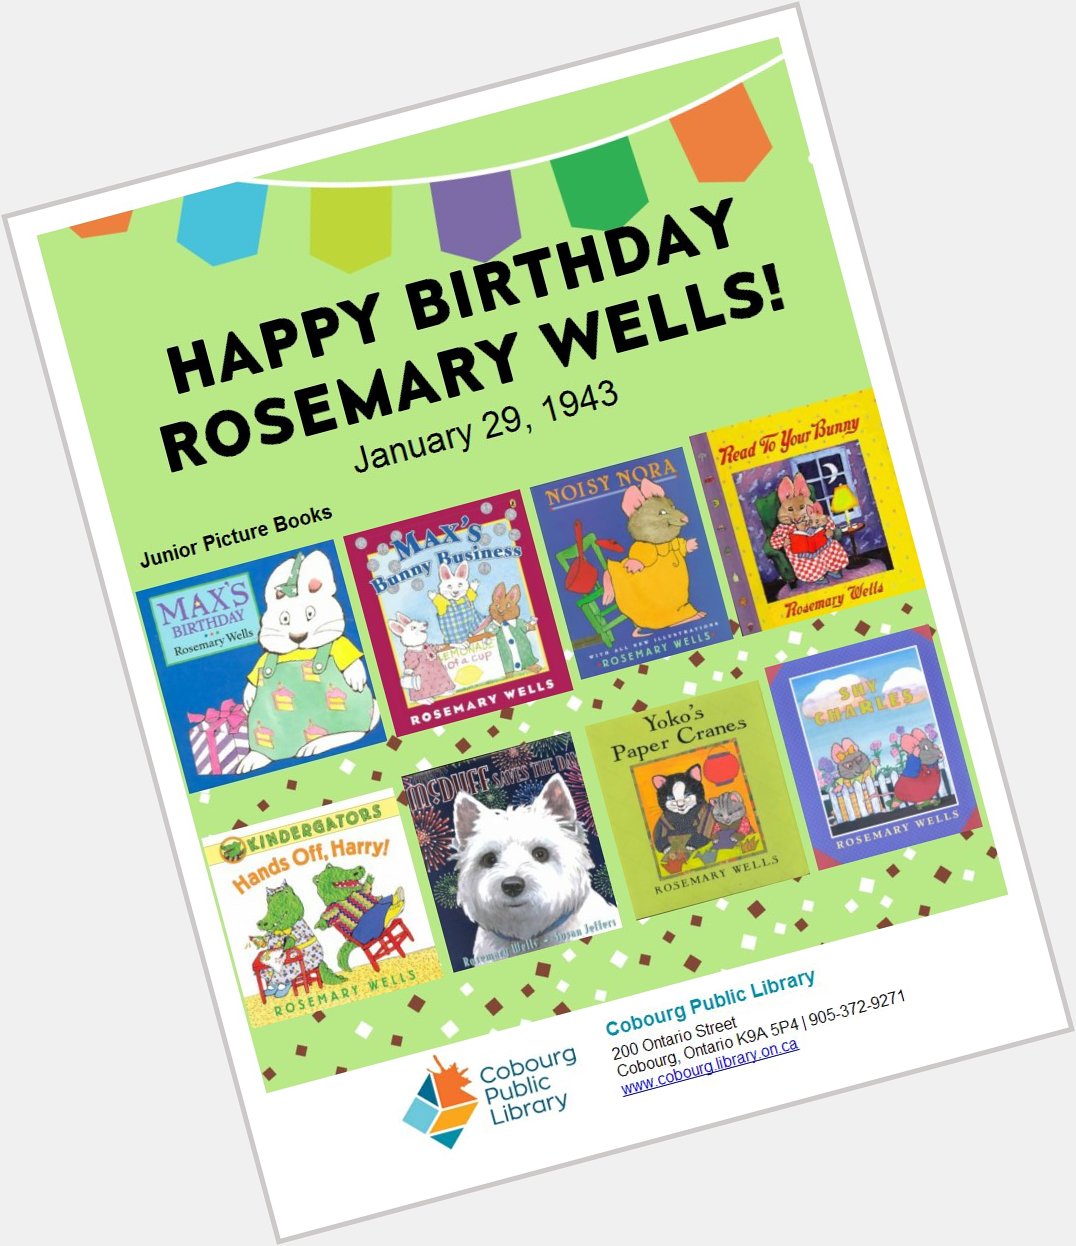 Happy Birthday to Rosemary Wells  